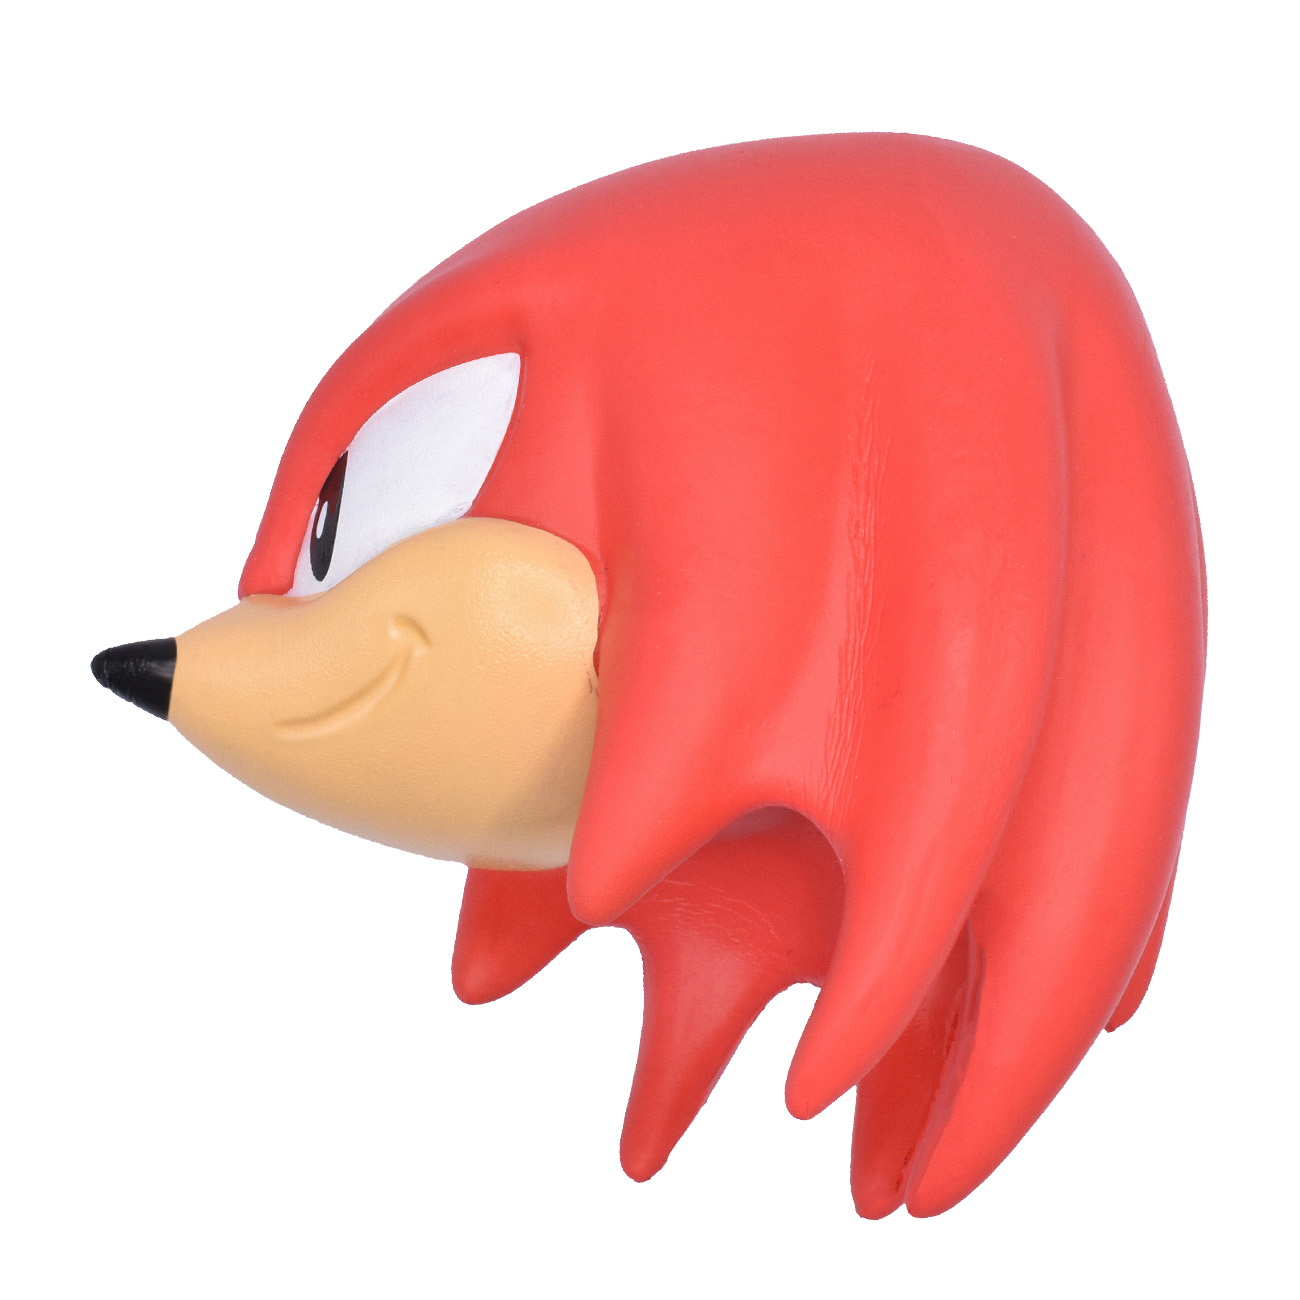 Sonic Knuckles SquishMe - Mega